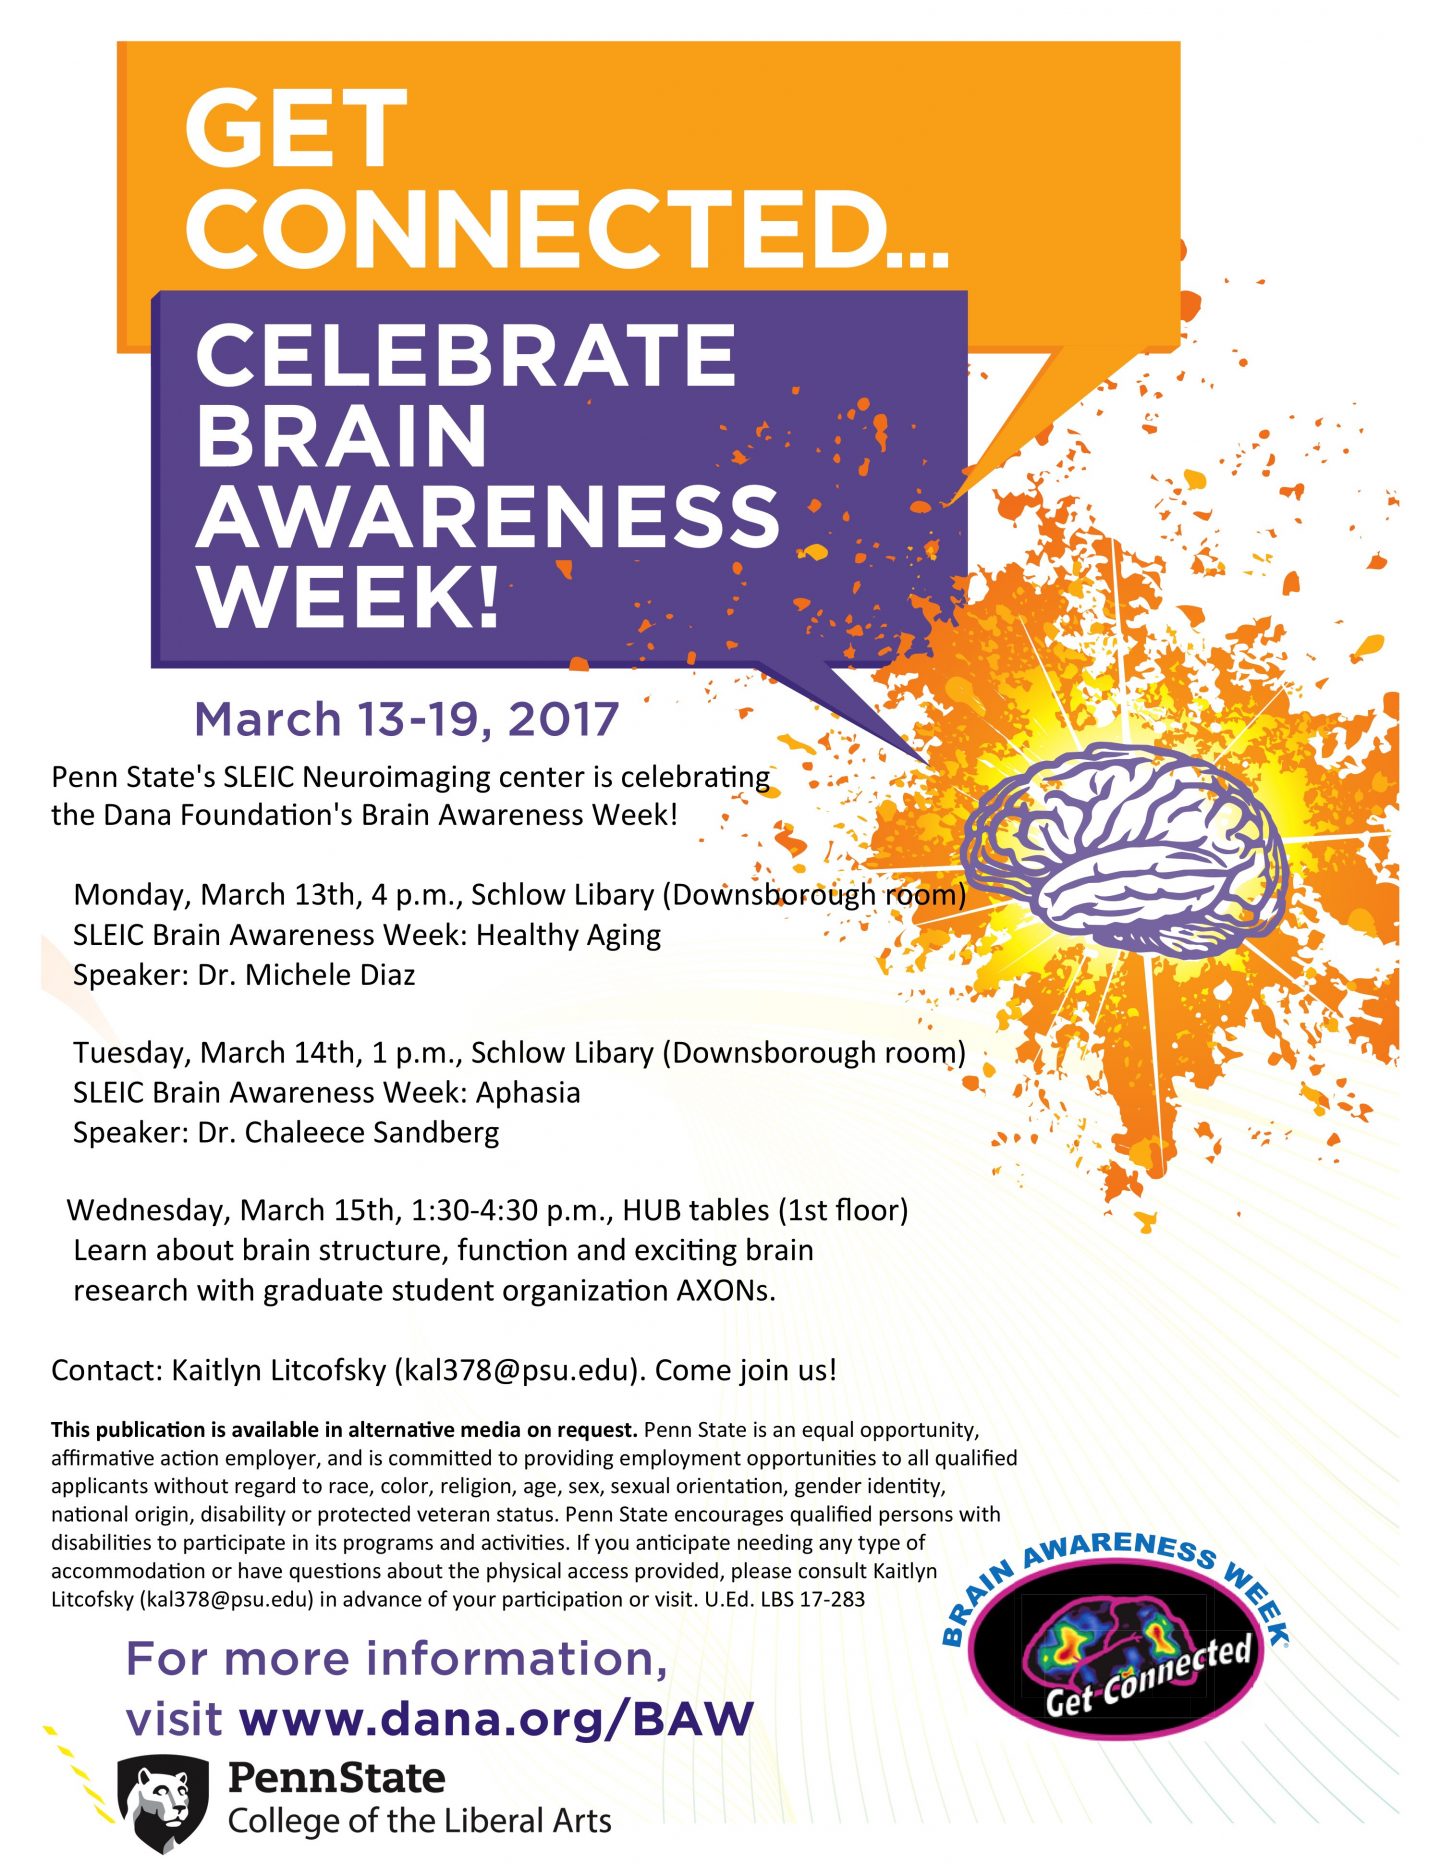 SLEIC Brain Awareness Week: Aphasia